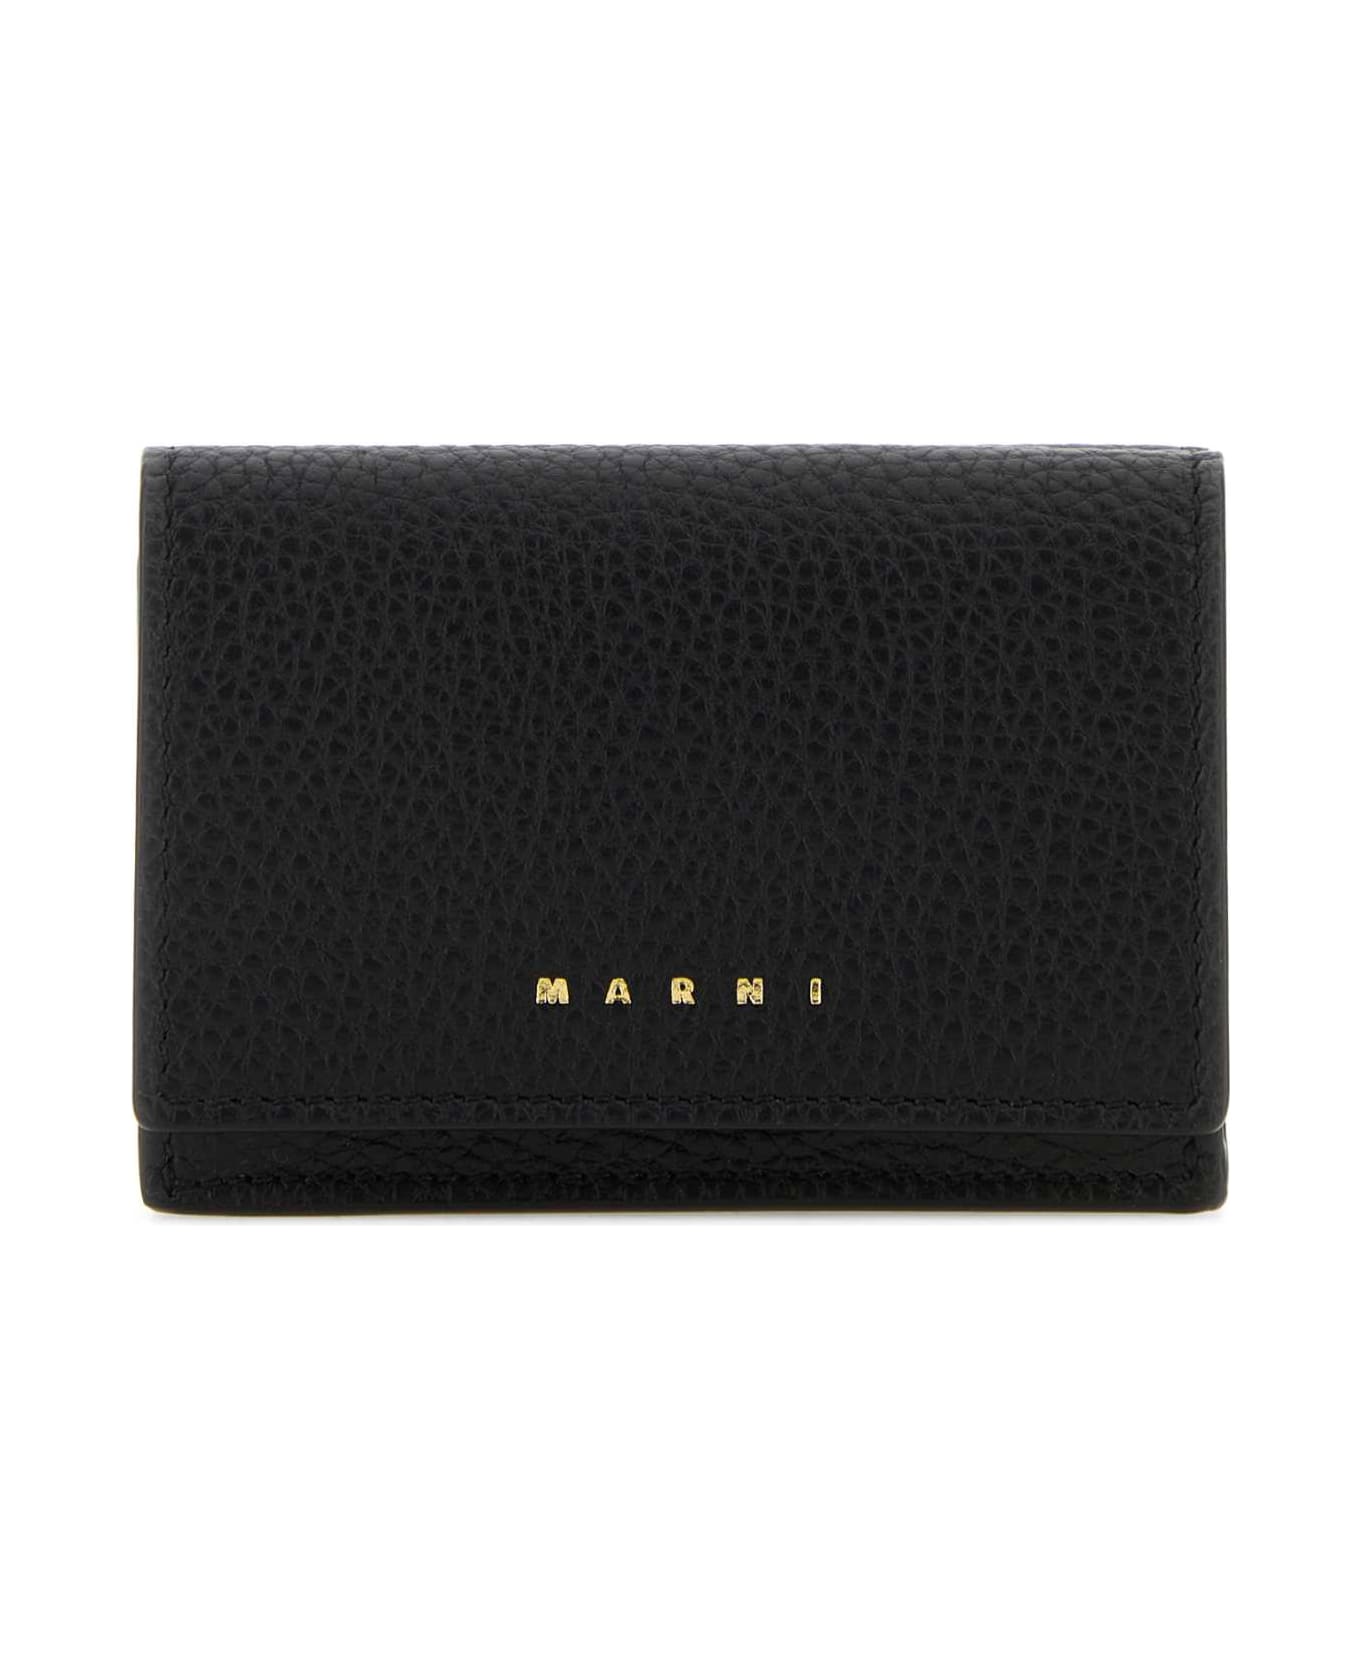 Marni Black Leather Wallet - BLACKSPHERICALGREEN